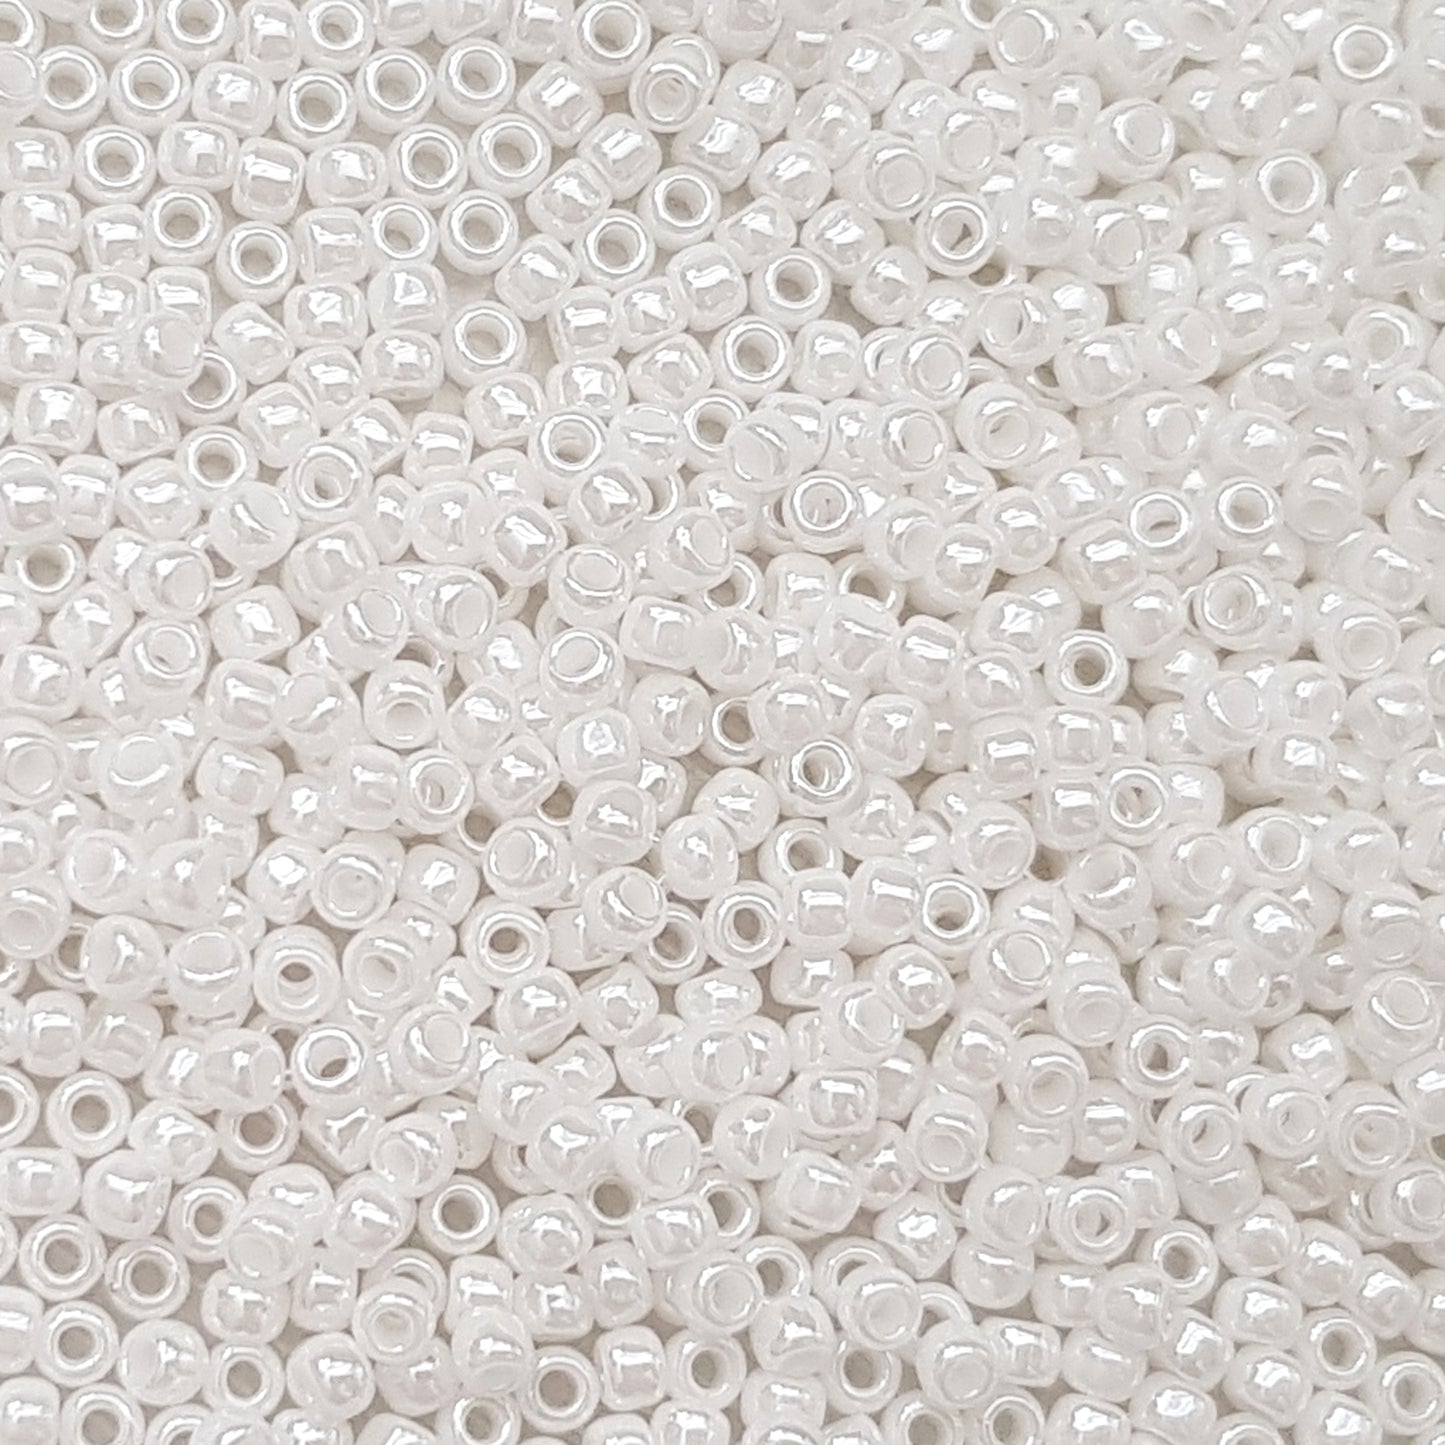 8/0 TR-121 White Lustre Opaque 10g/30g Round Toho Seed Beads - Beading Supply